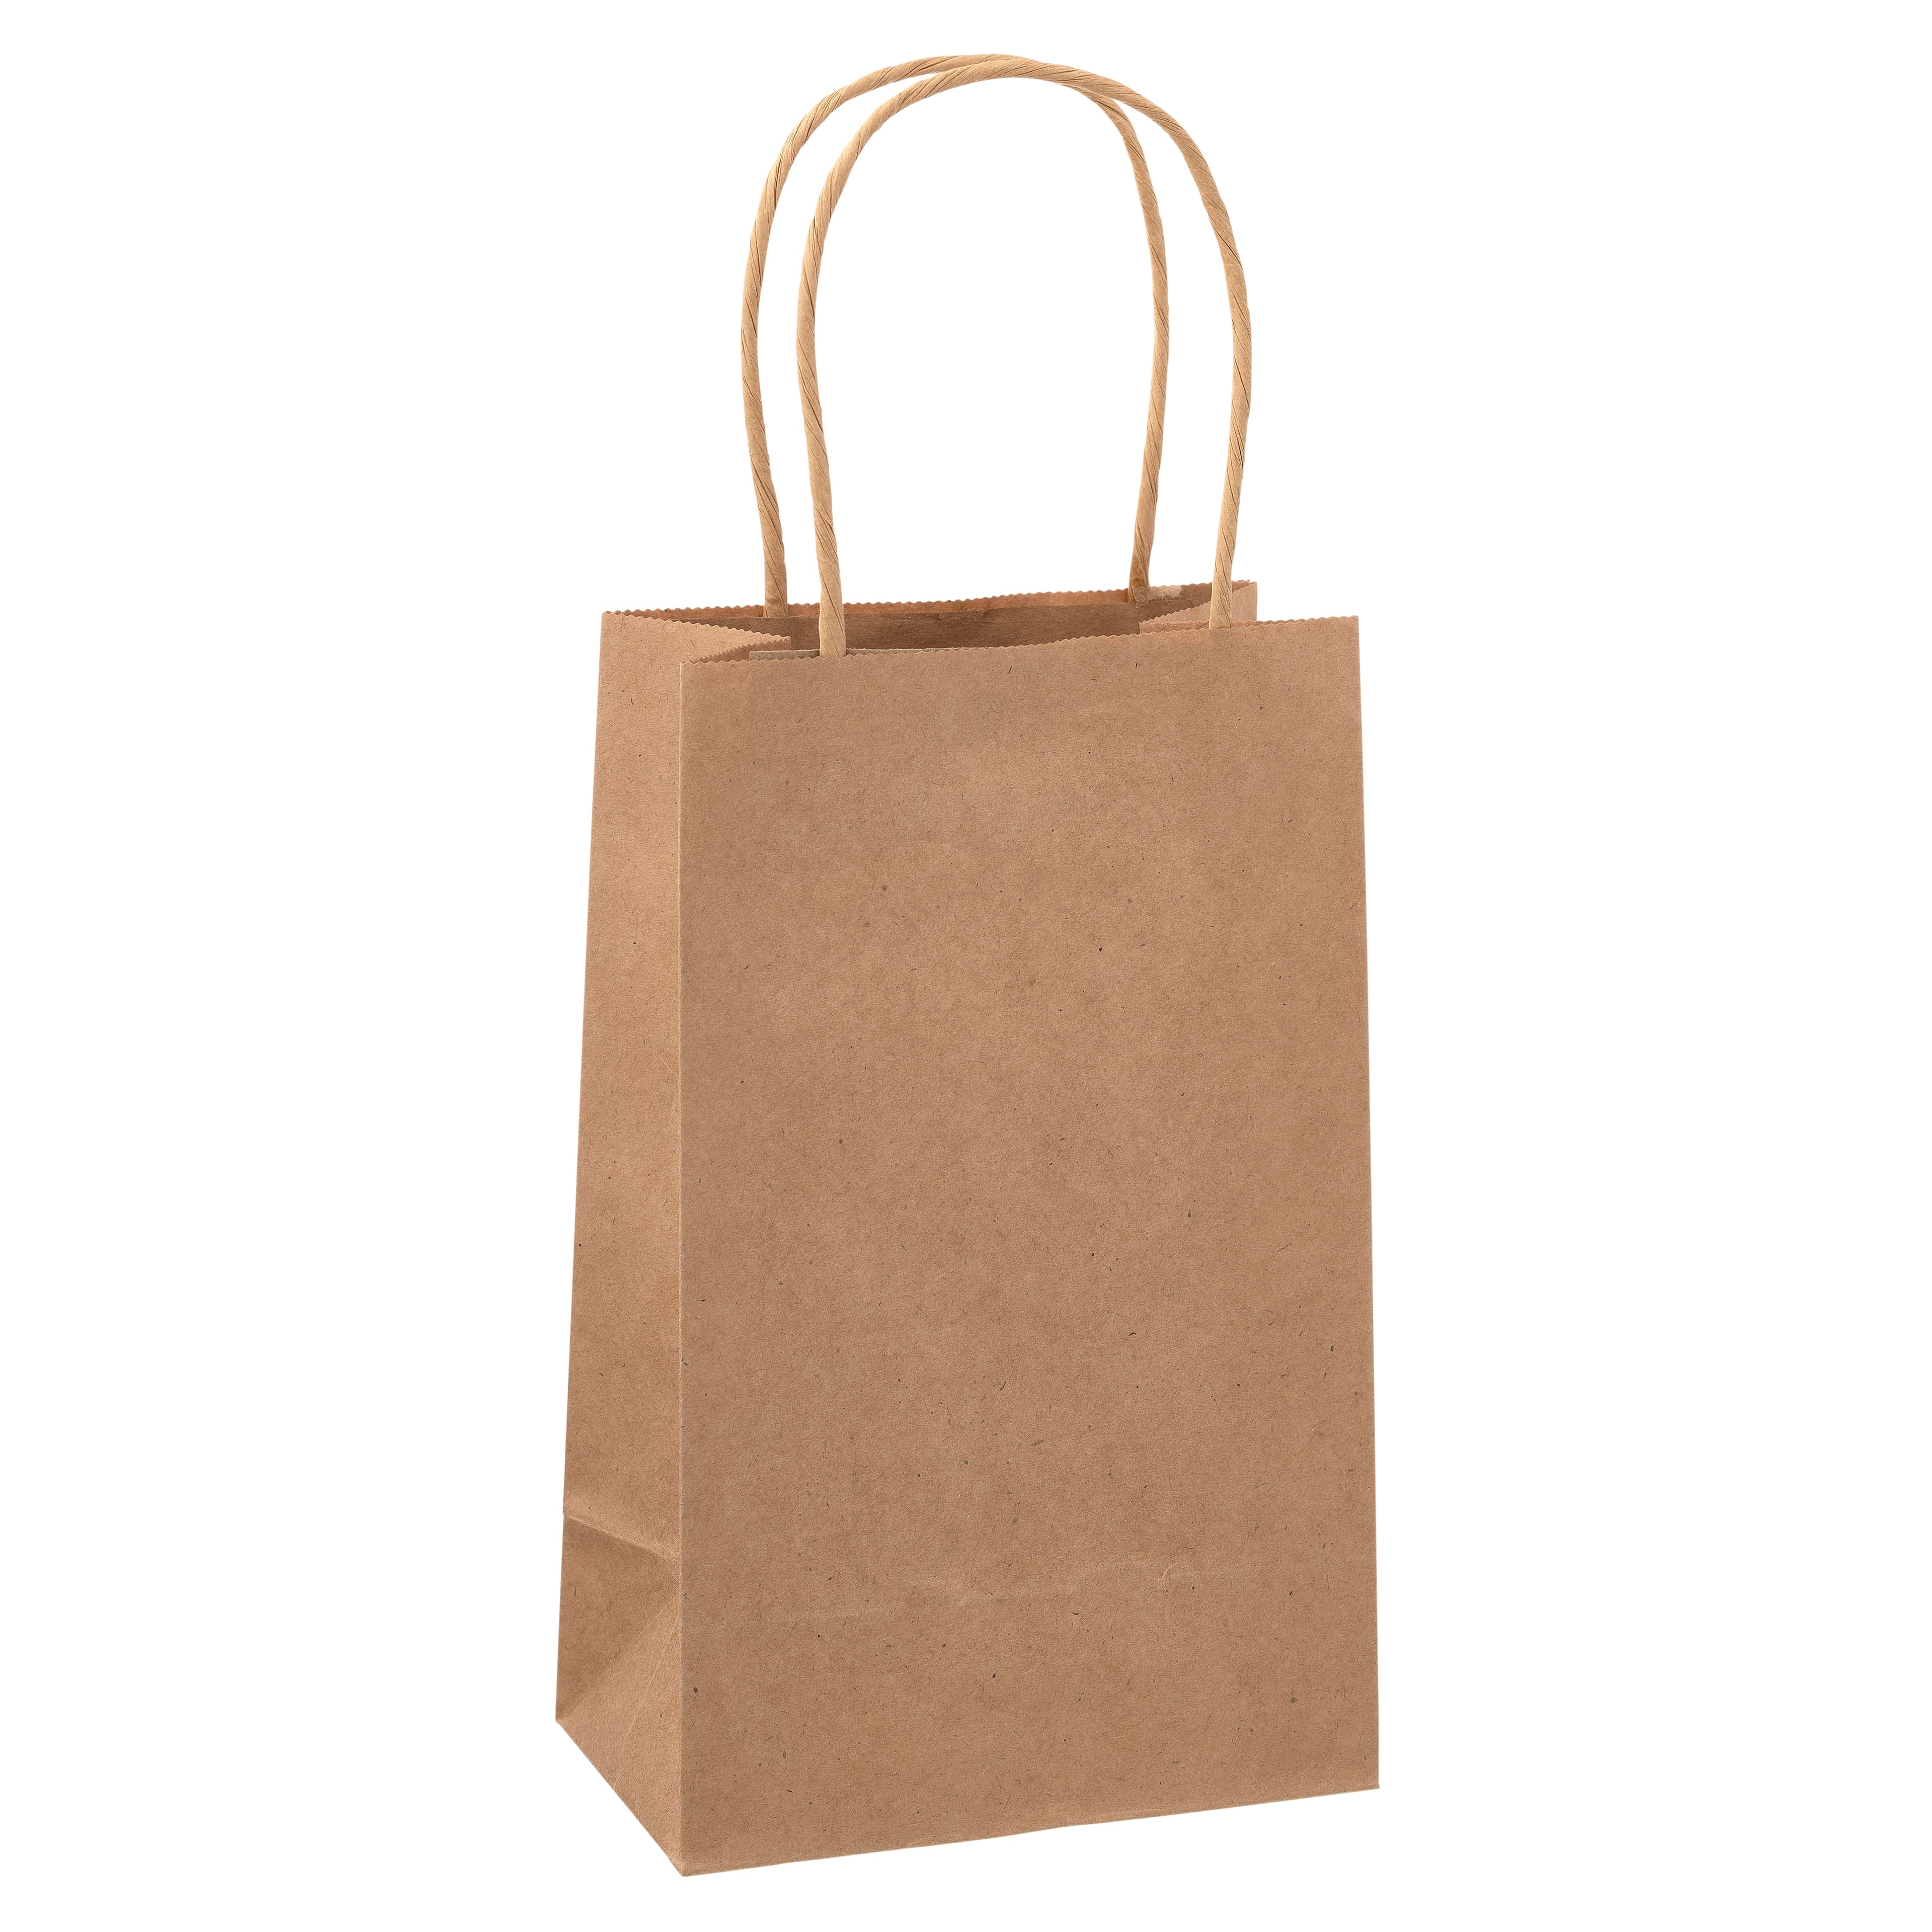 Clear PVC DIY Tote Bag Handbag Making Kit Handmade Gift Bags Craft Accessories Tool Set Birthday Holiday-A